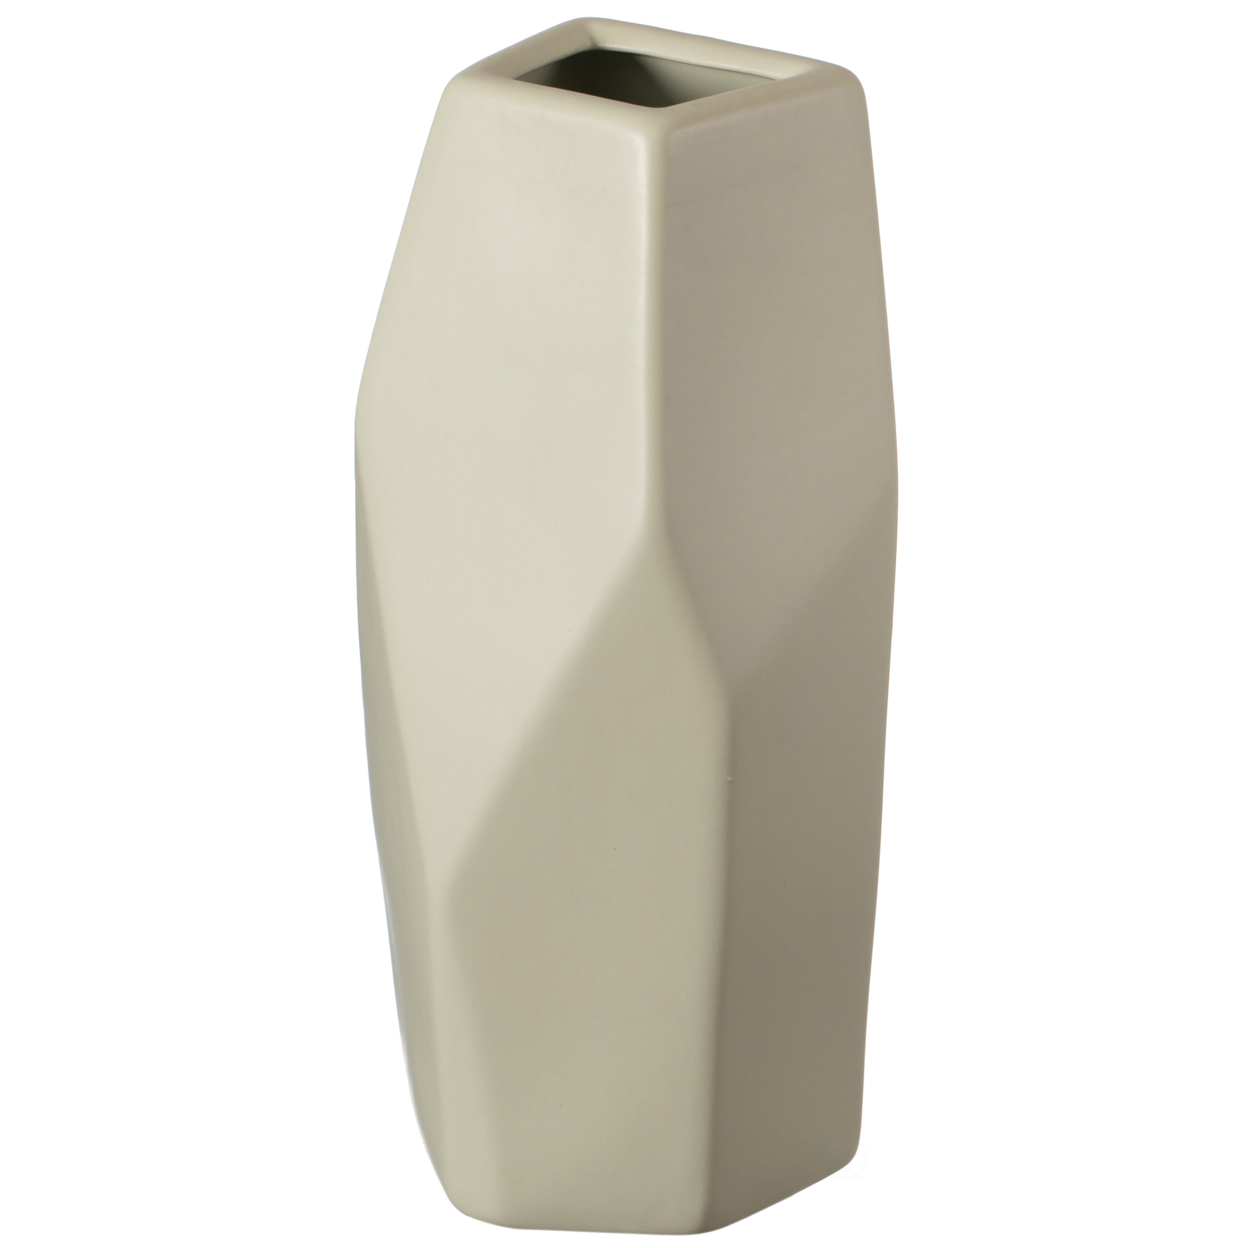 Decorative Ceramic Multi Paned Vase, Modern Style Centerpiece Table Vase - Beige